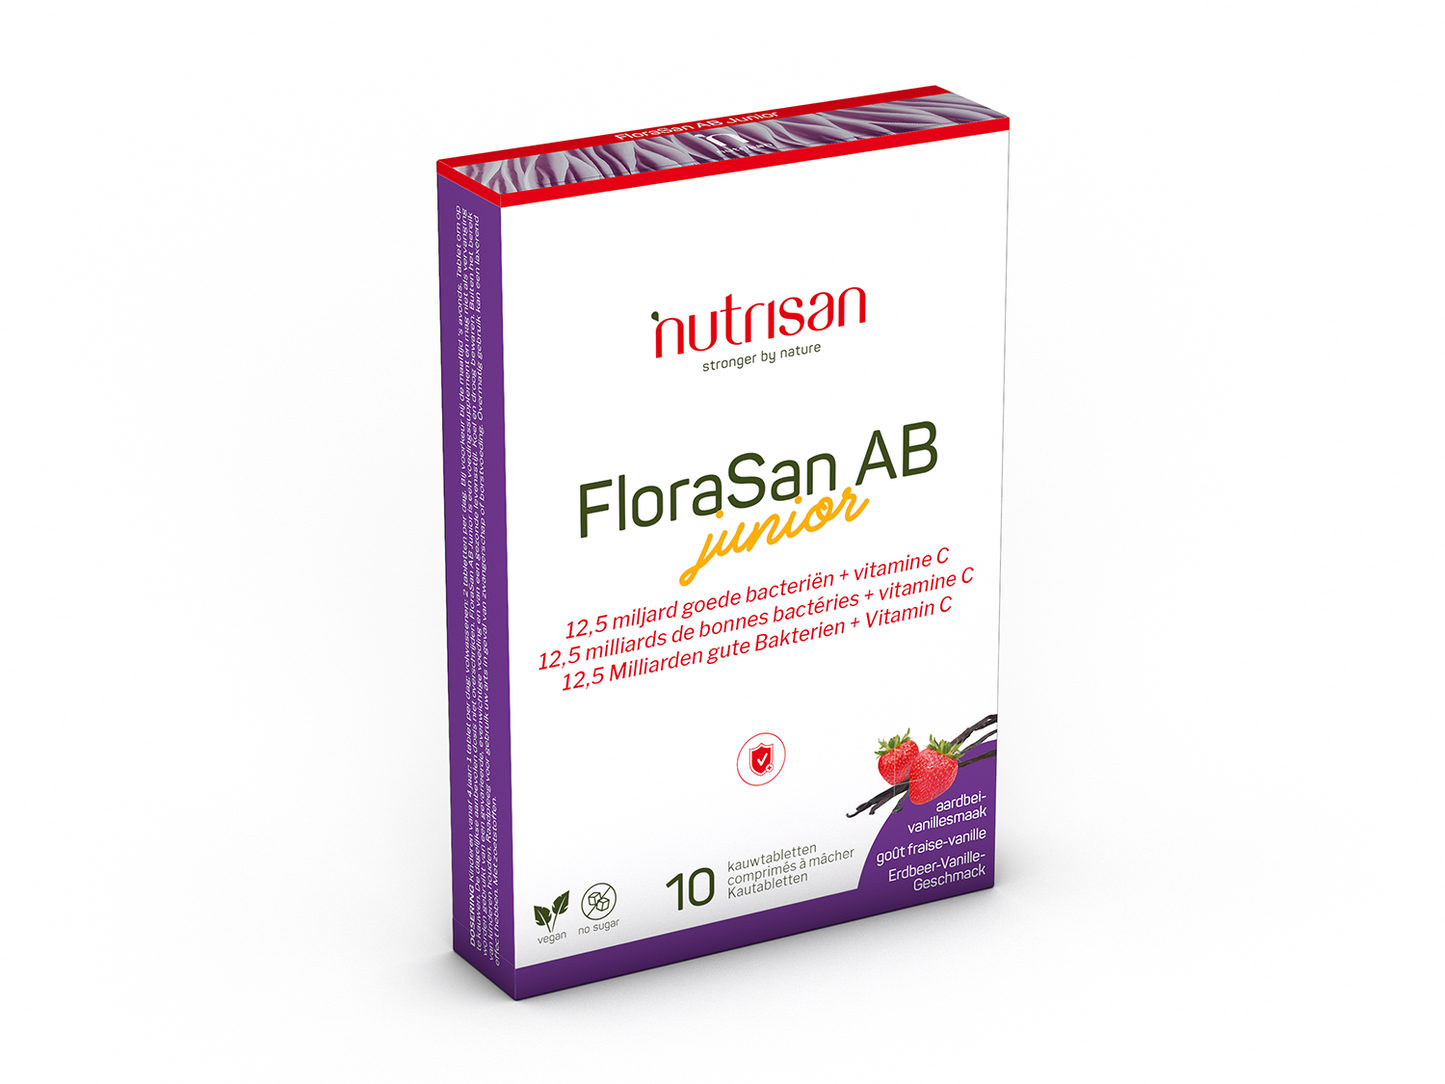 Nutrisan FloraSan AB Junior - 10 kauwtabletten - Prebioticum - Synbiotica